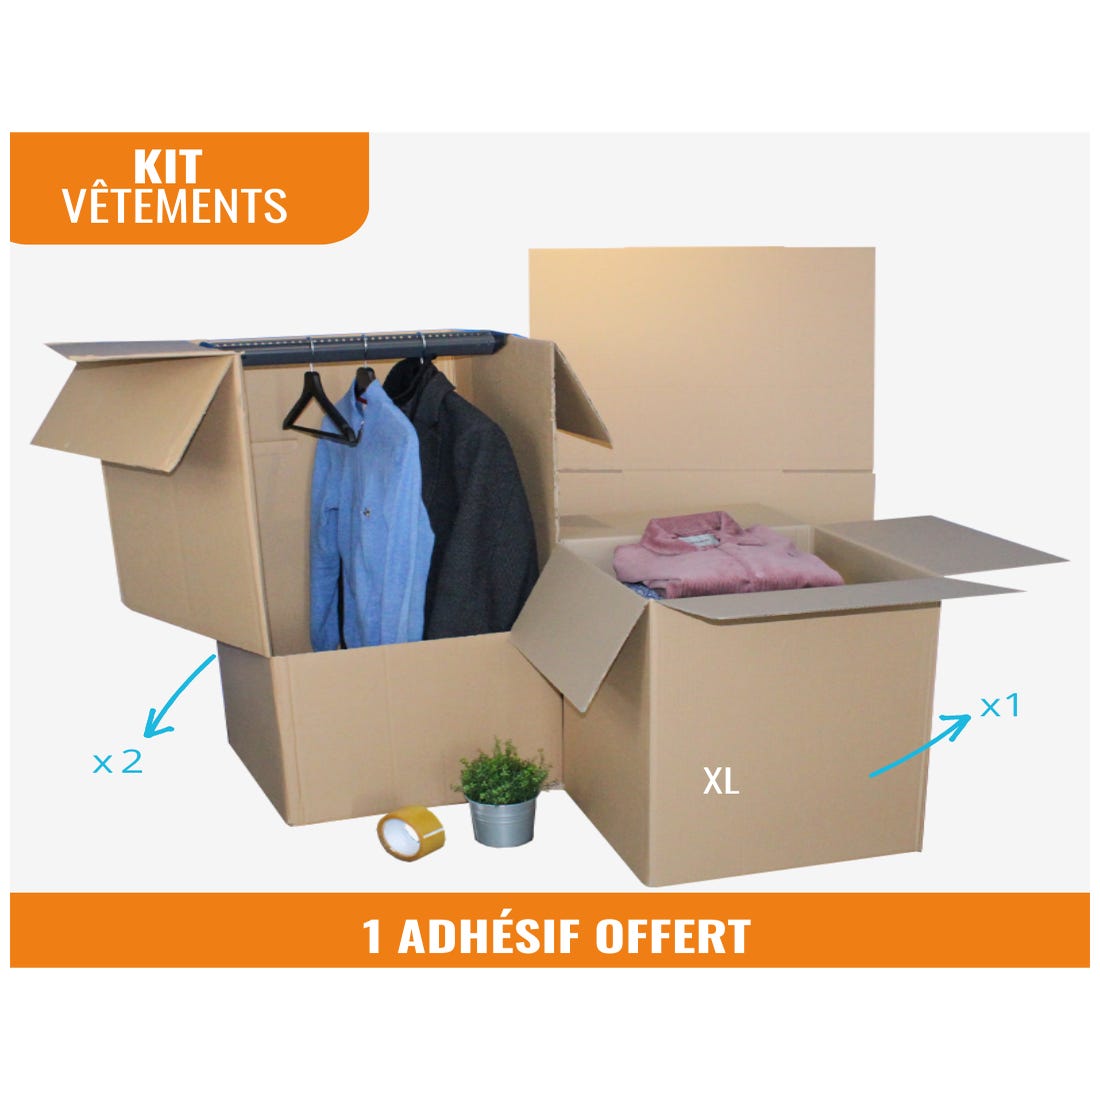 Kit déménagement vêtements : 2 penderies + 1 carton XL + 1 adhésifs